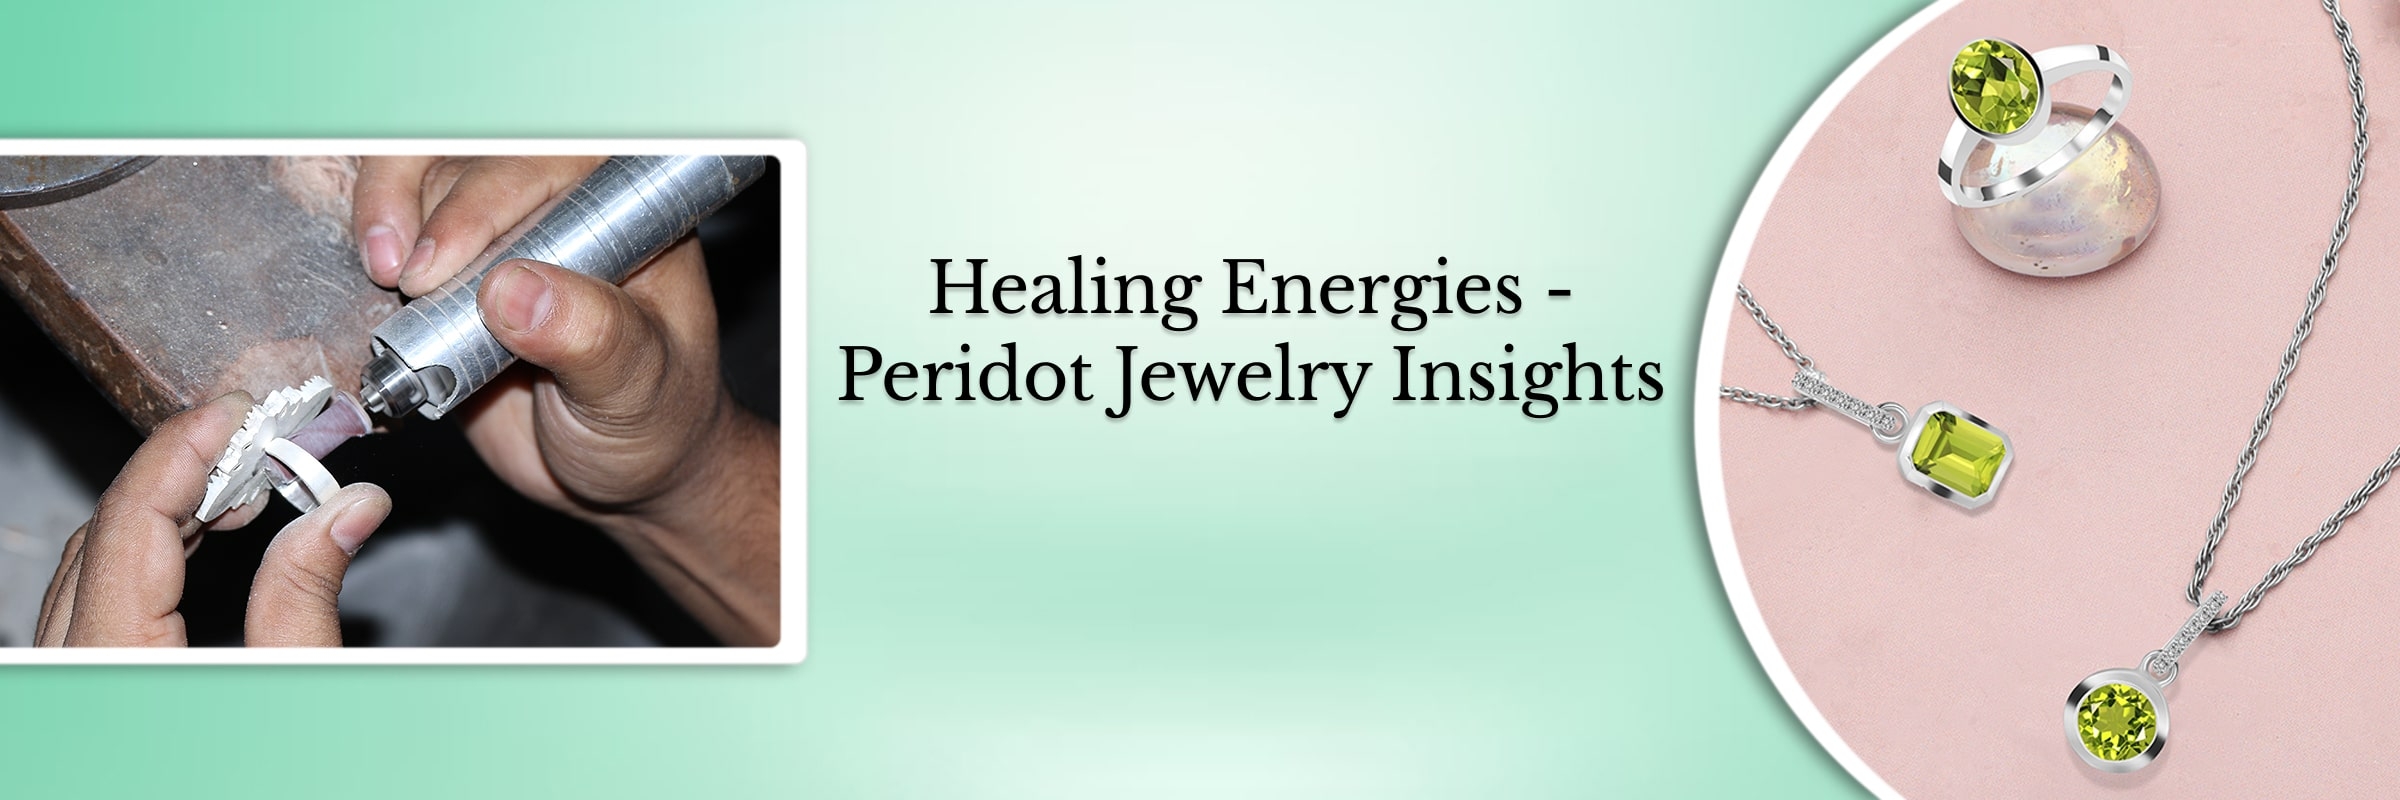 Healing Properties of the Peridot Jewelry